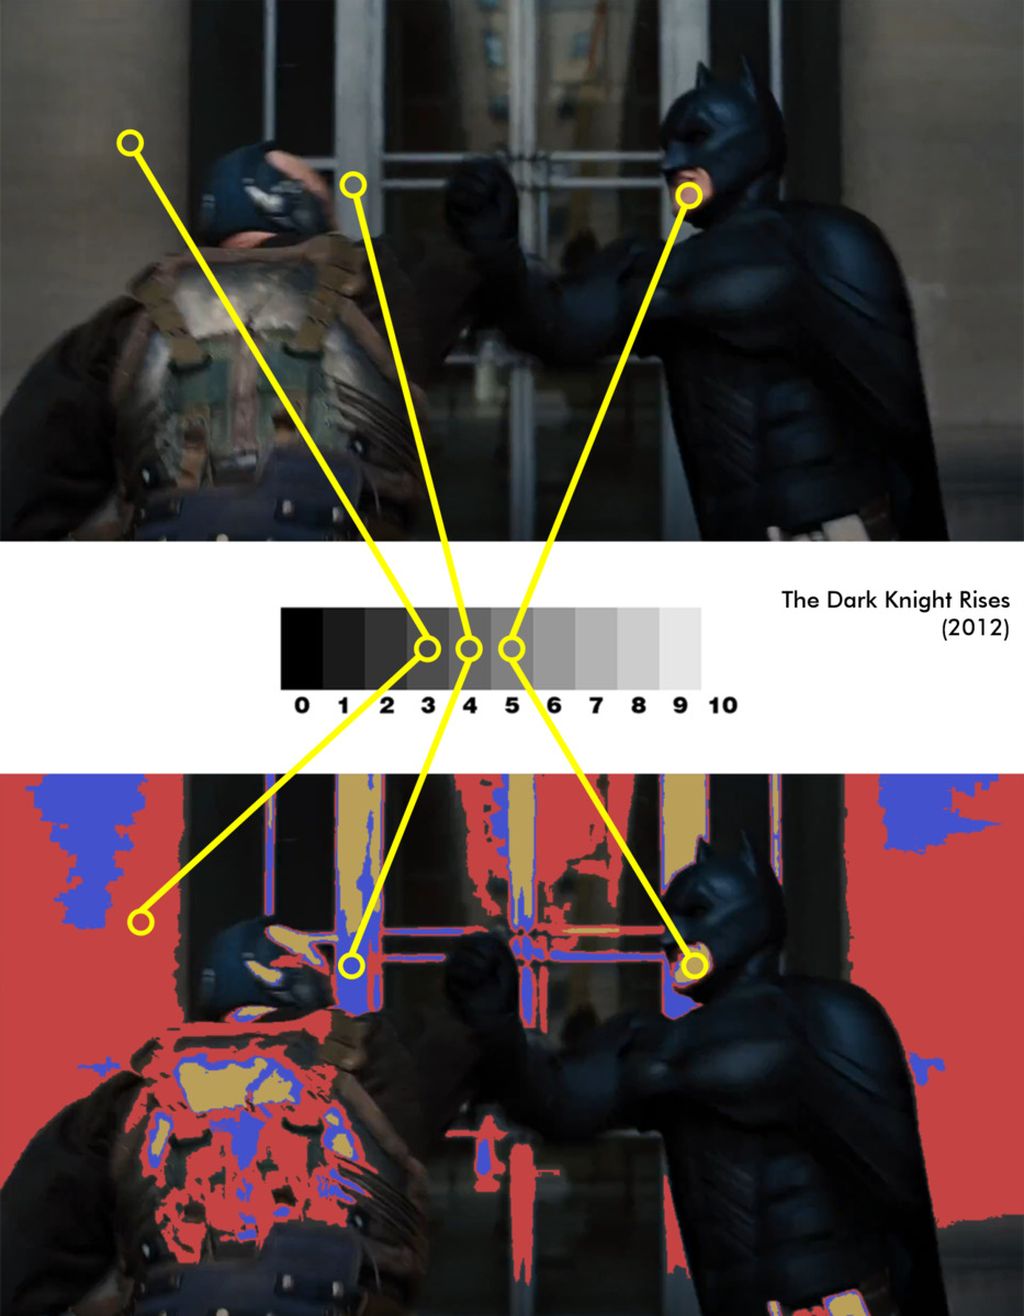 Menurut pembagian <i>zone system</i>, cahaya yang mengenai wajah para tokoh, Bruce Wayne serta Bane berada diantara zona 5.